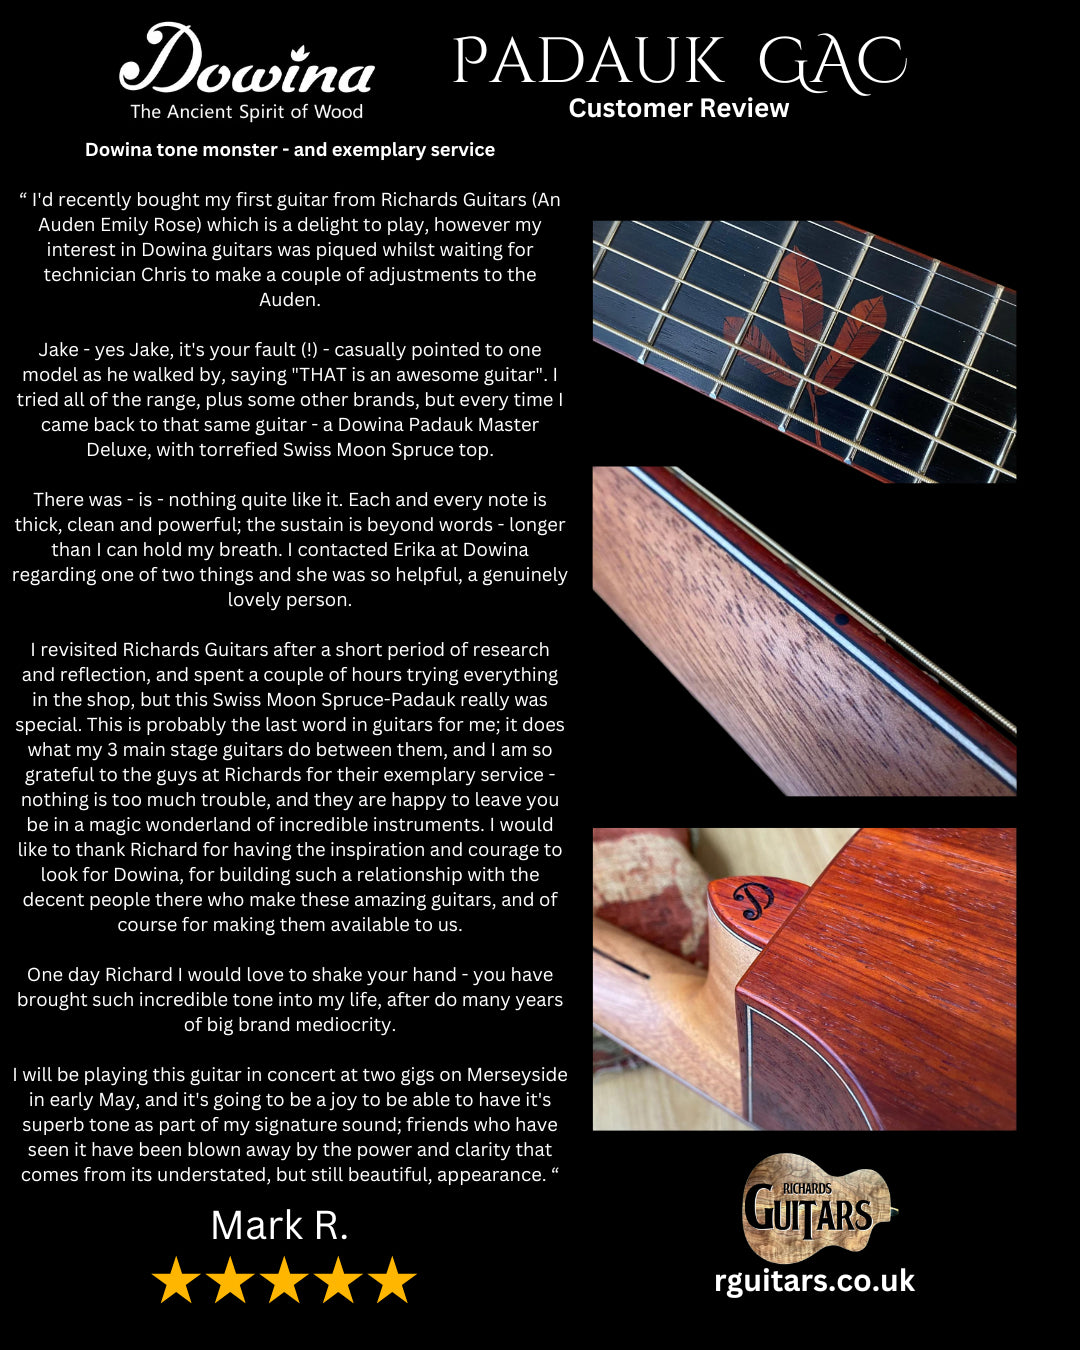 Dowina PADAUK GAC Deluxe (Torrified Swiss Moon Spruce), Acoustic Guitar for sale at Richards Guitars.